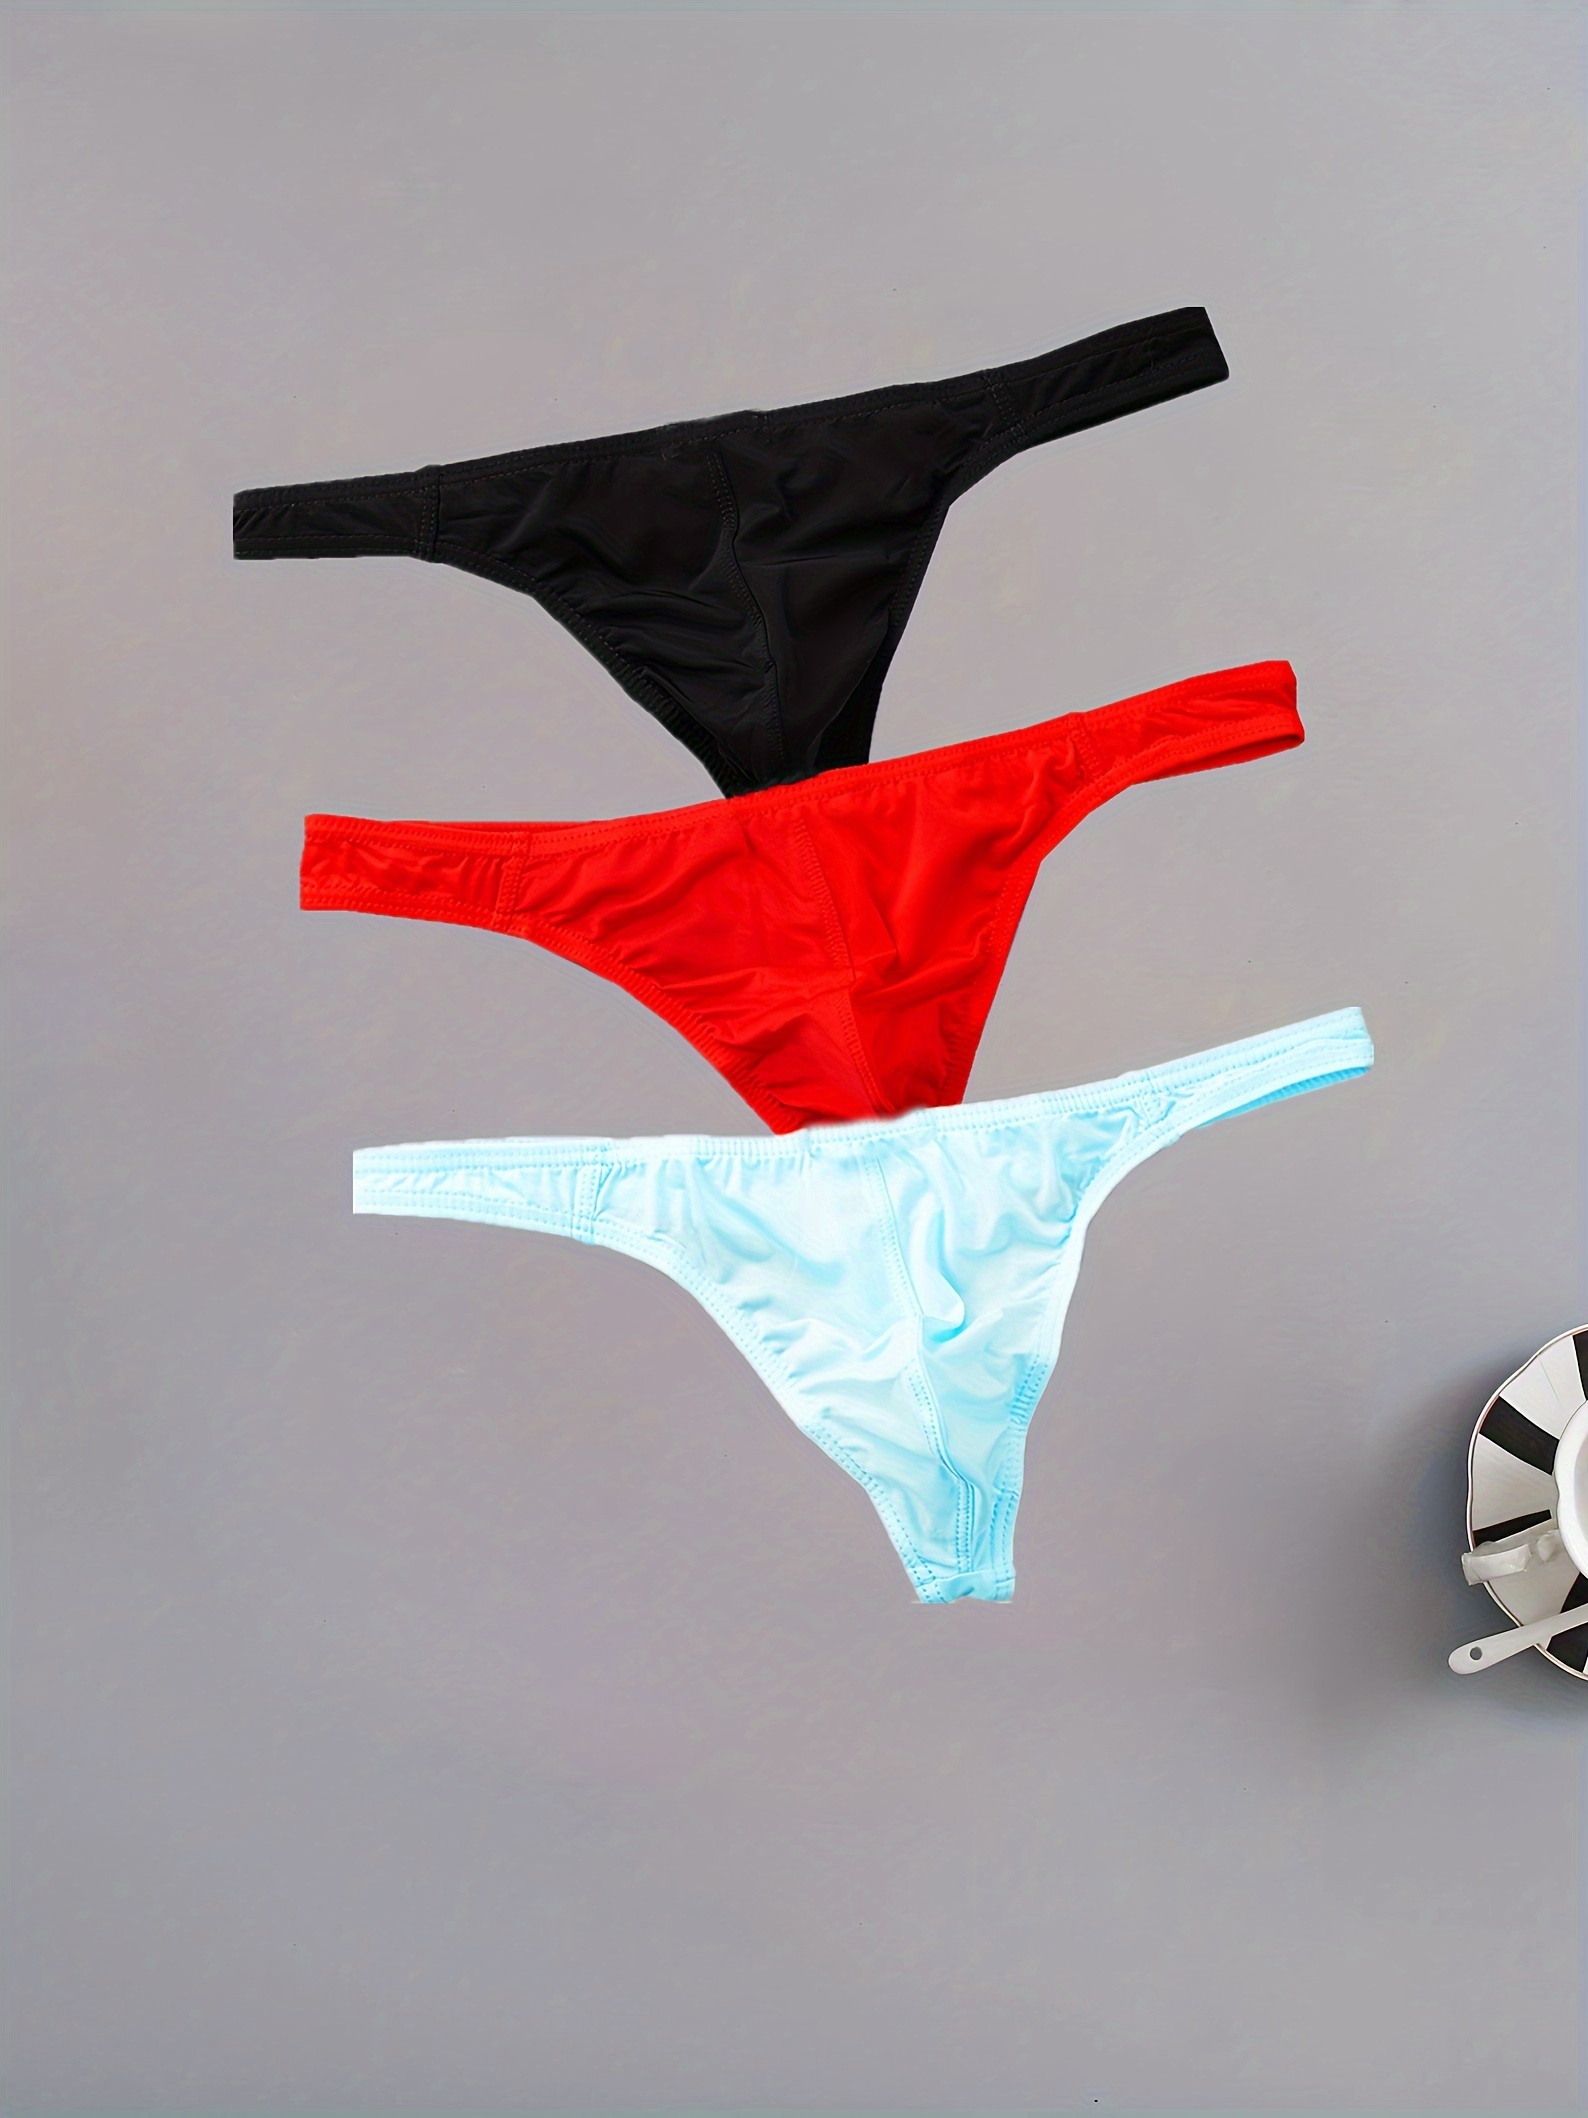 10 for $9.90] Seamless Ice Silk Panties Women Underwear Panty